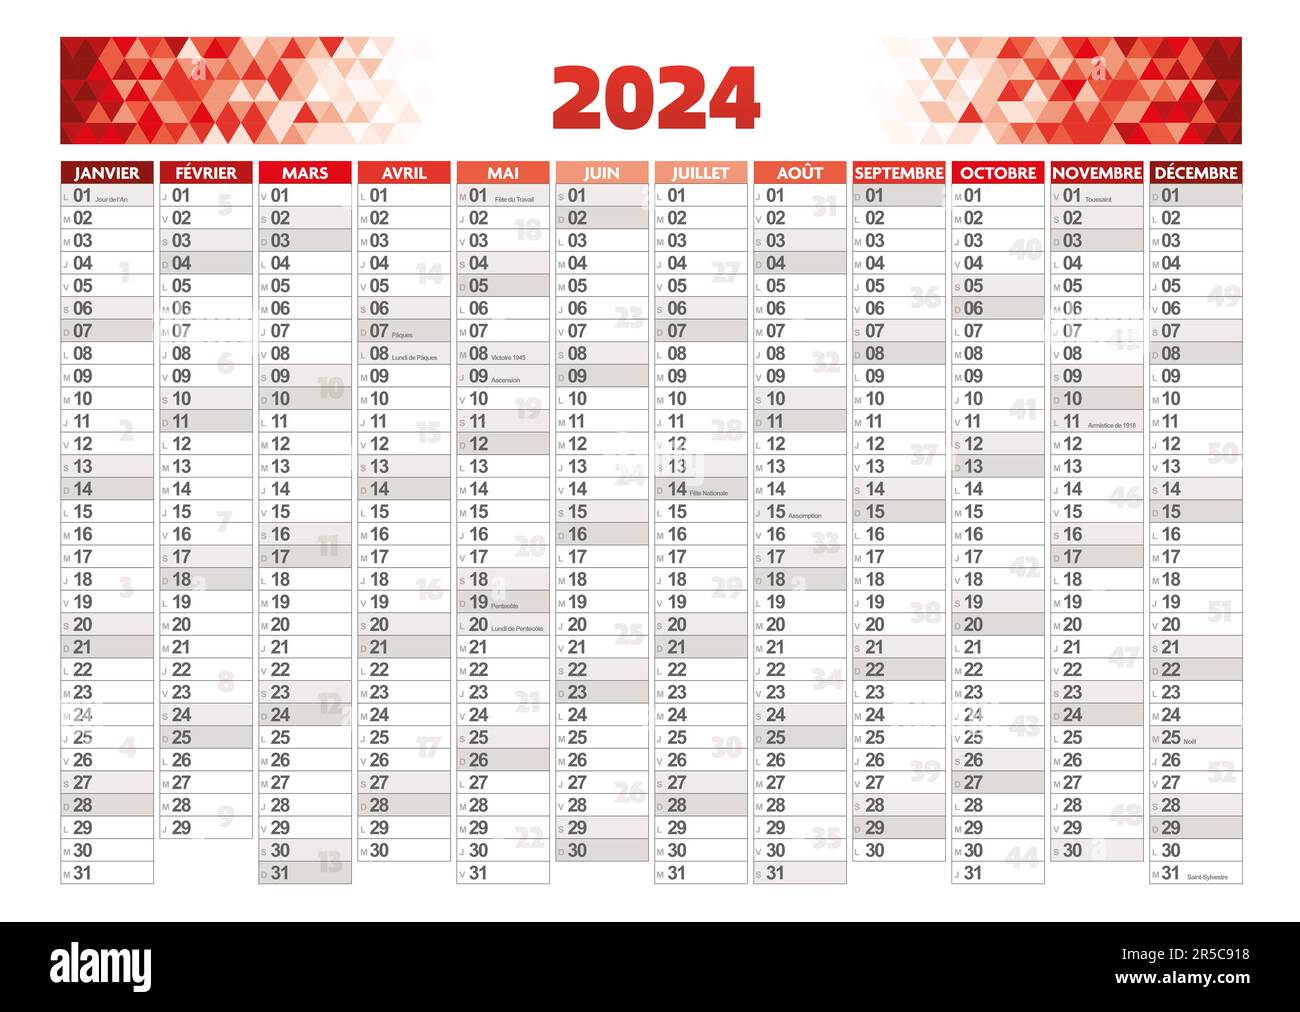 2024 france front annual calendar theme Stock Photo Alamy